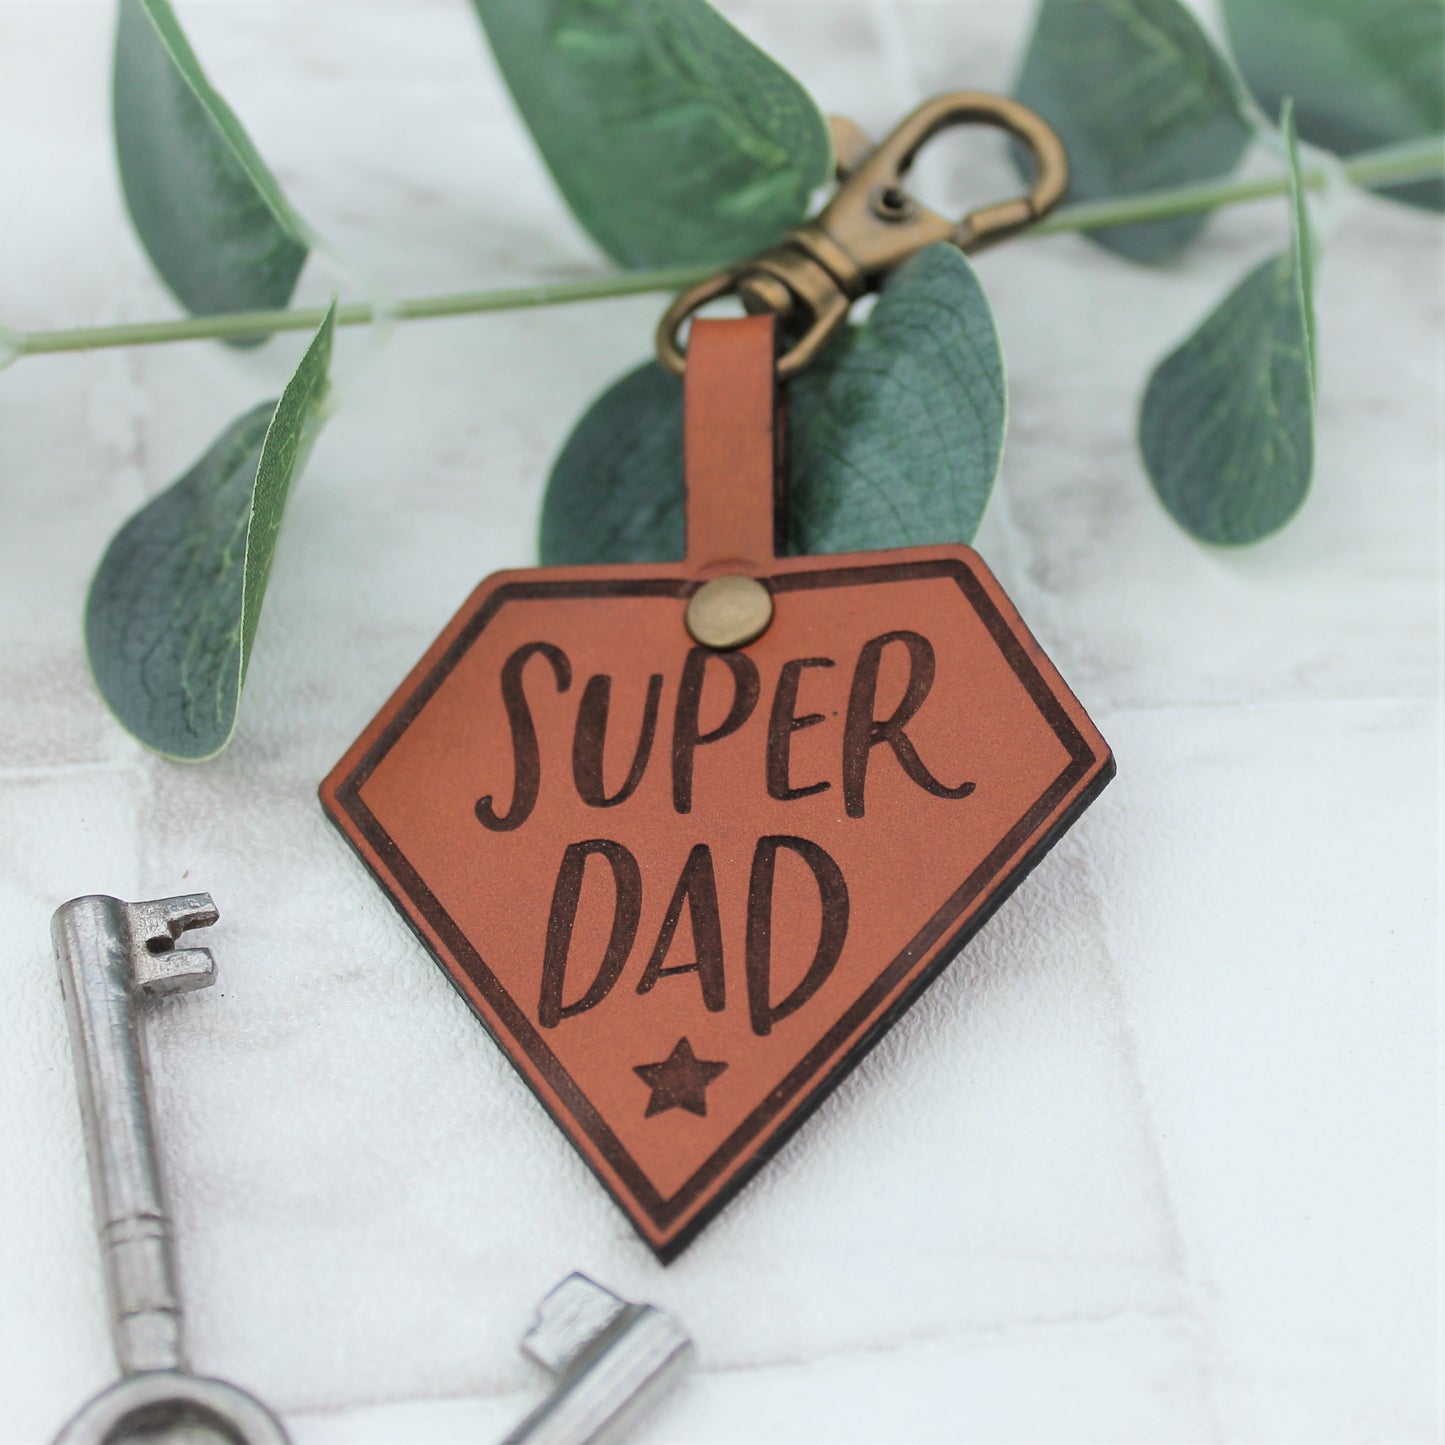 Super dad real leather engraved keyring with super hero design 